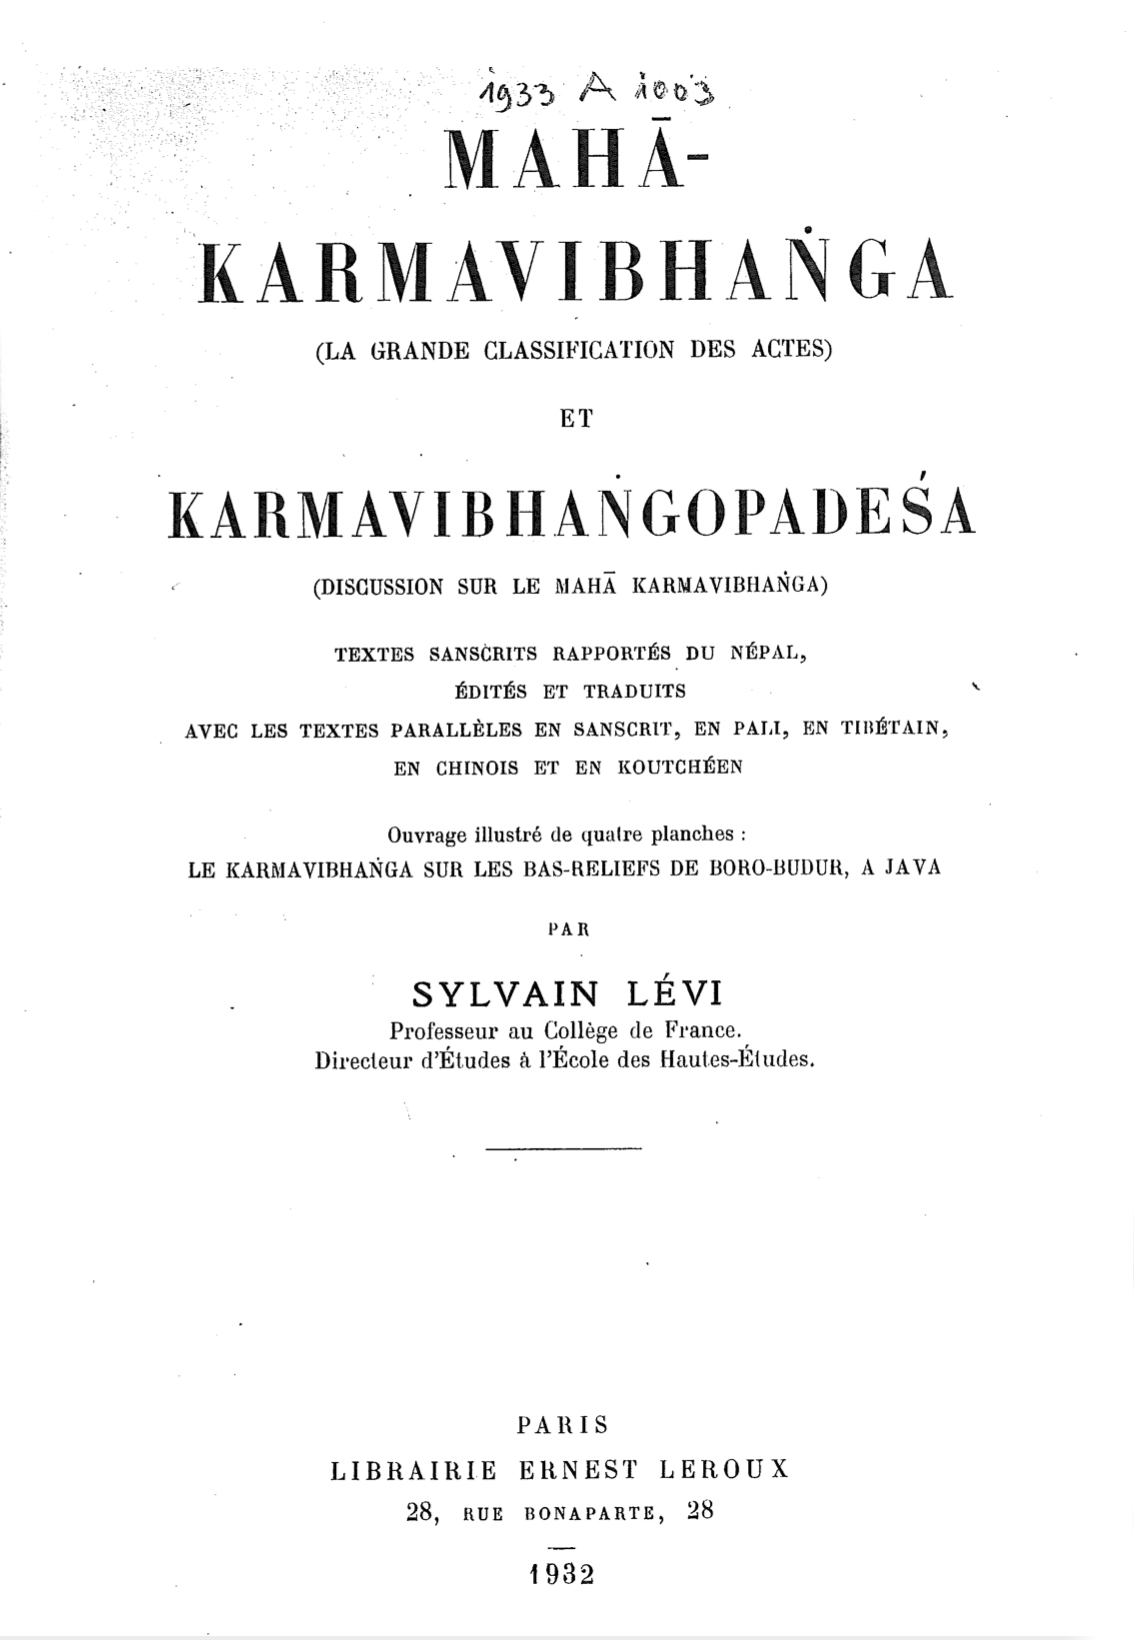 Maha-Karmavibhanga et Karmavibhangopadesa-front.jpg